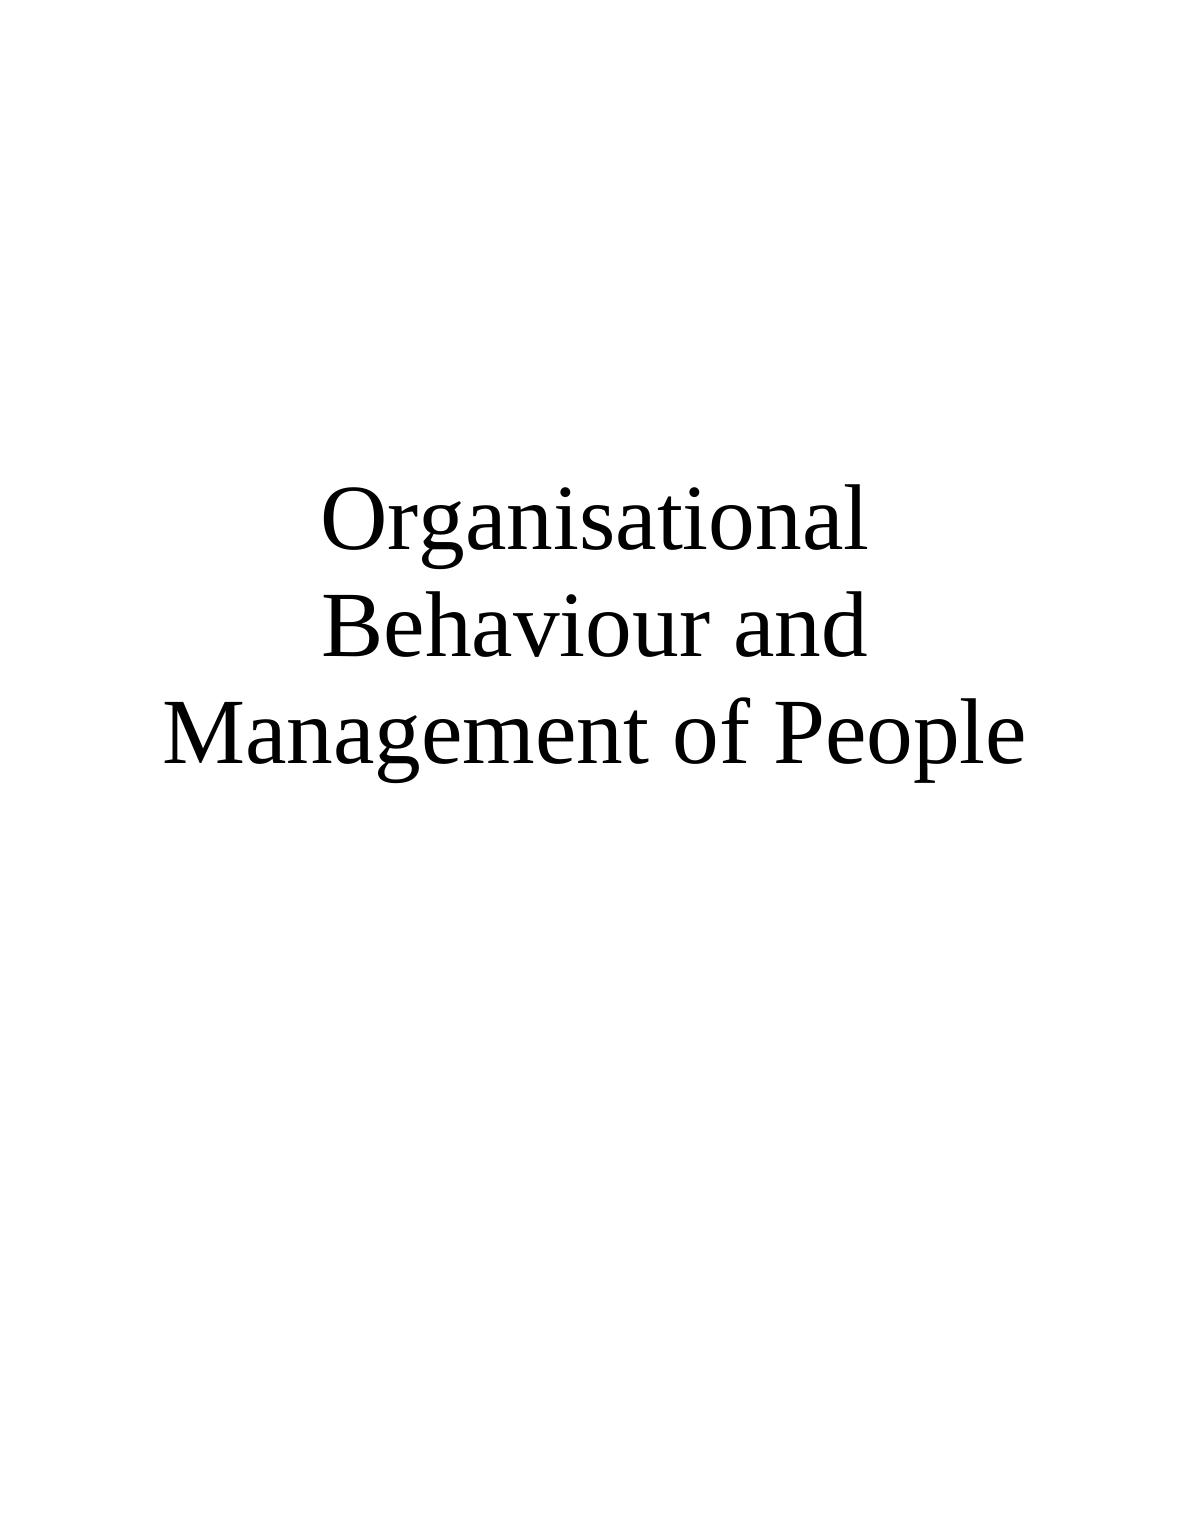 Organisational Behaviour and Management Assignment_1